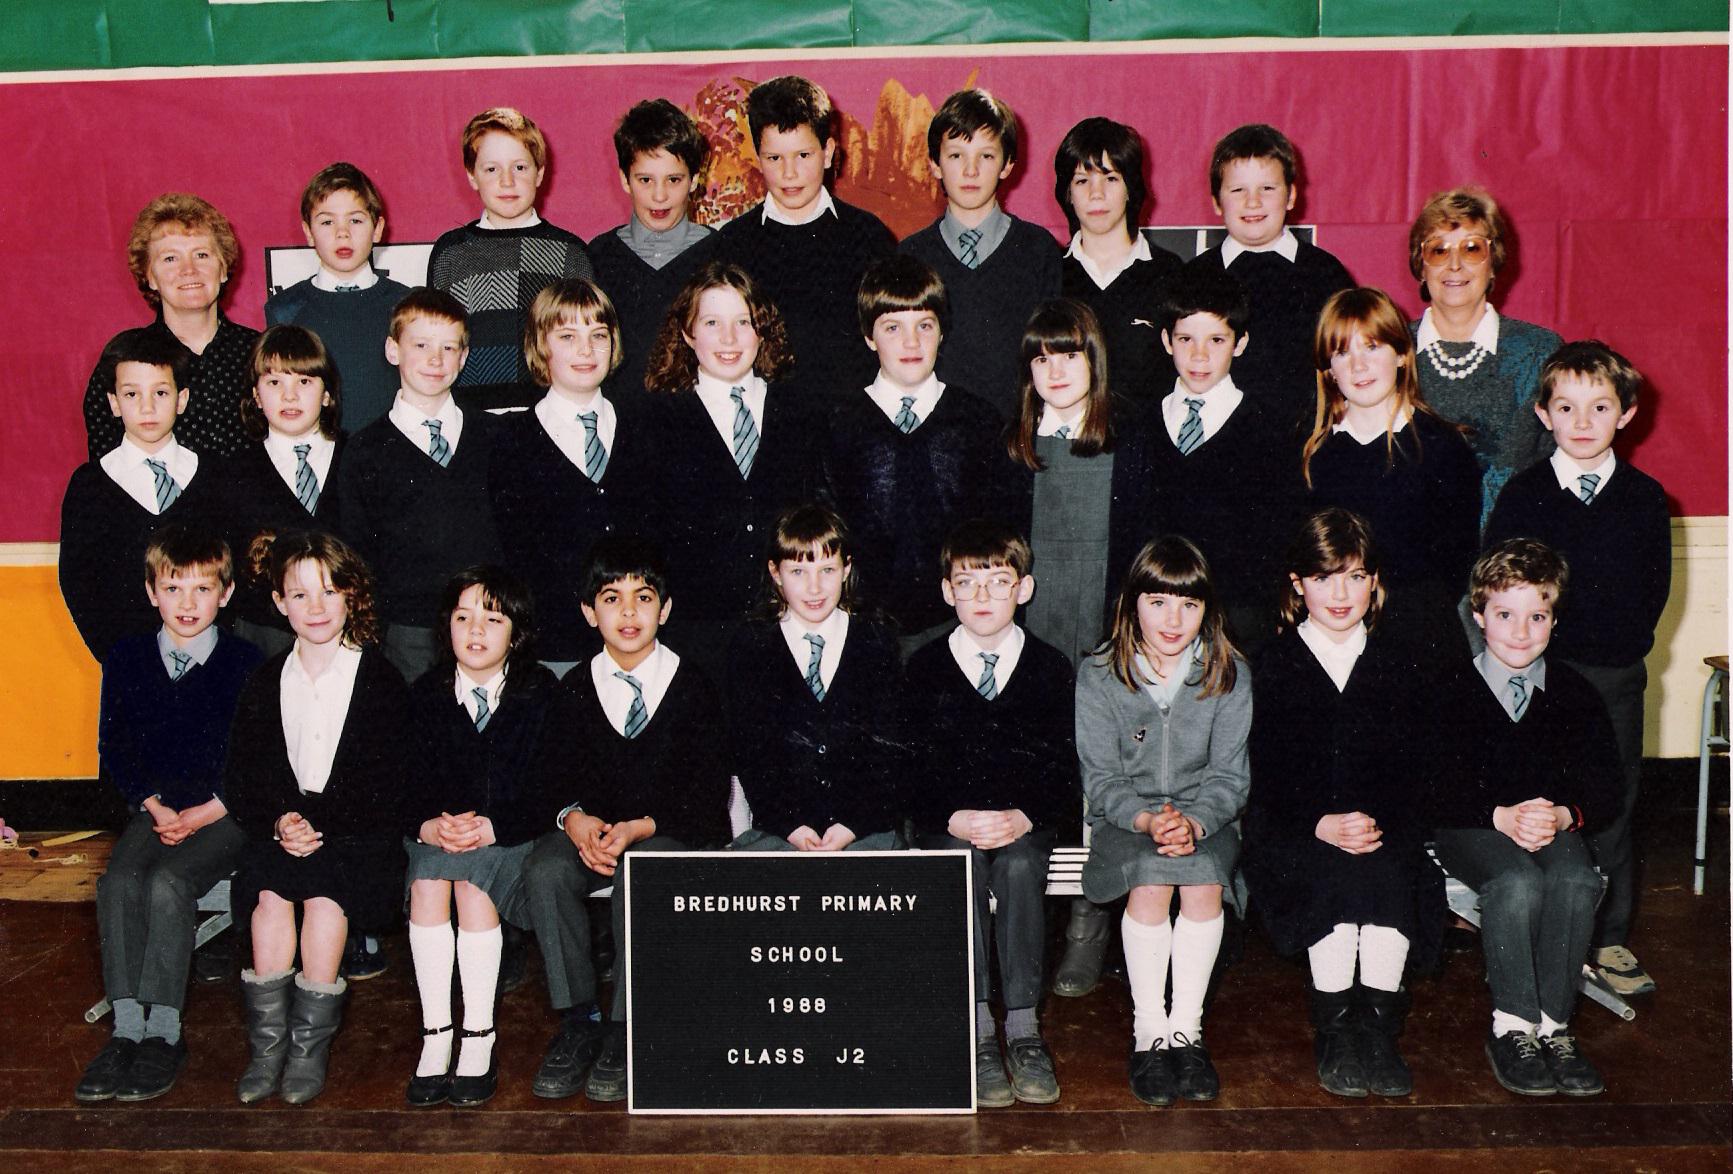 1988 - Bredhurst School Class J2